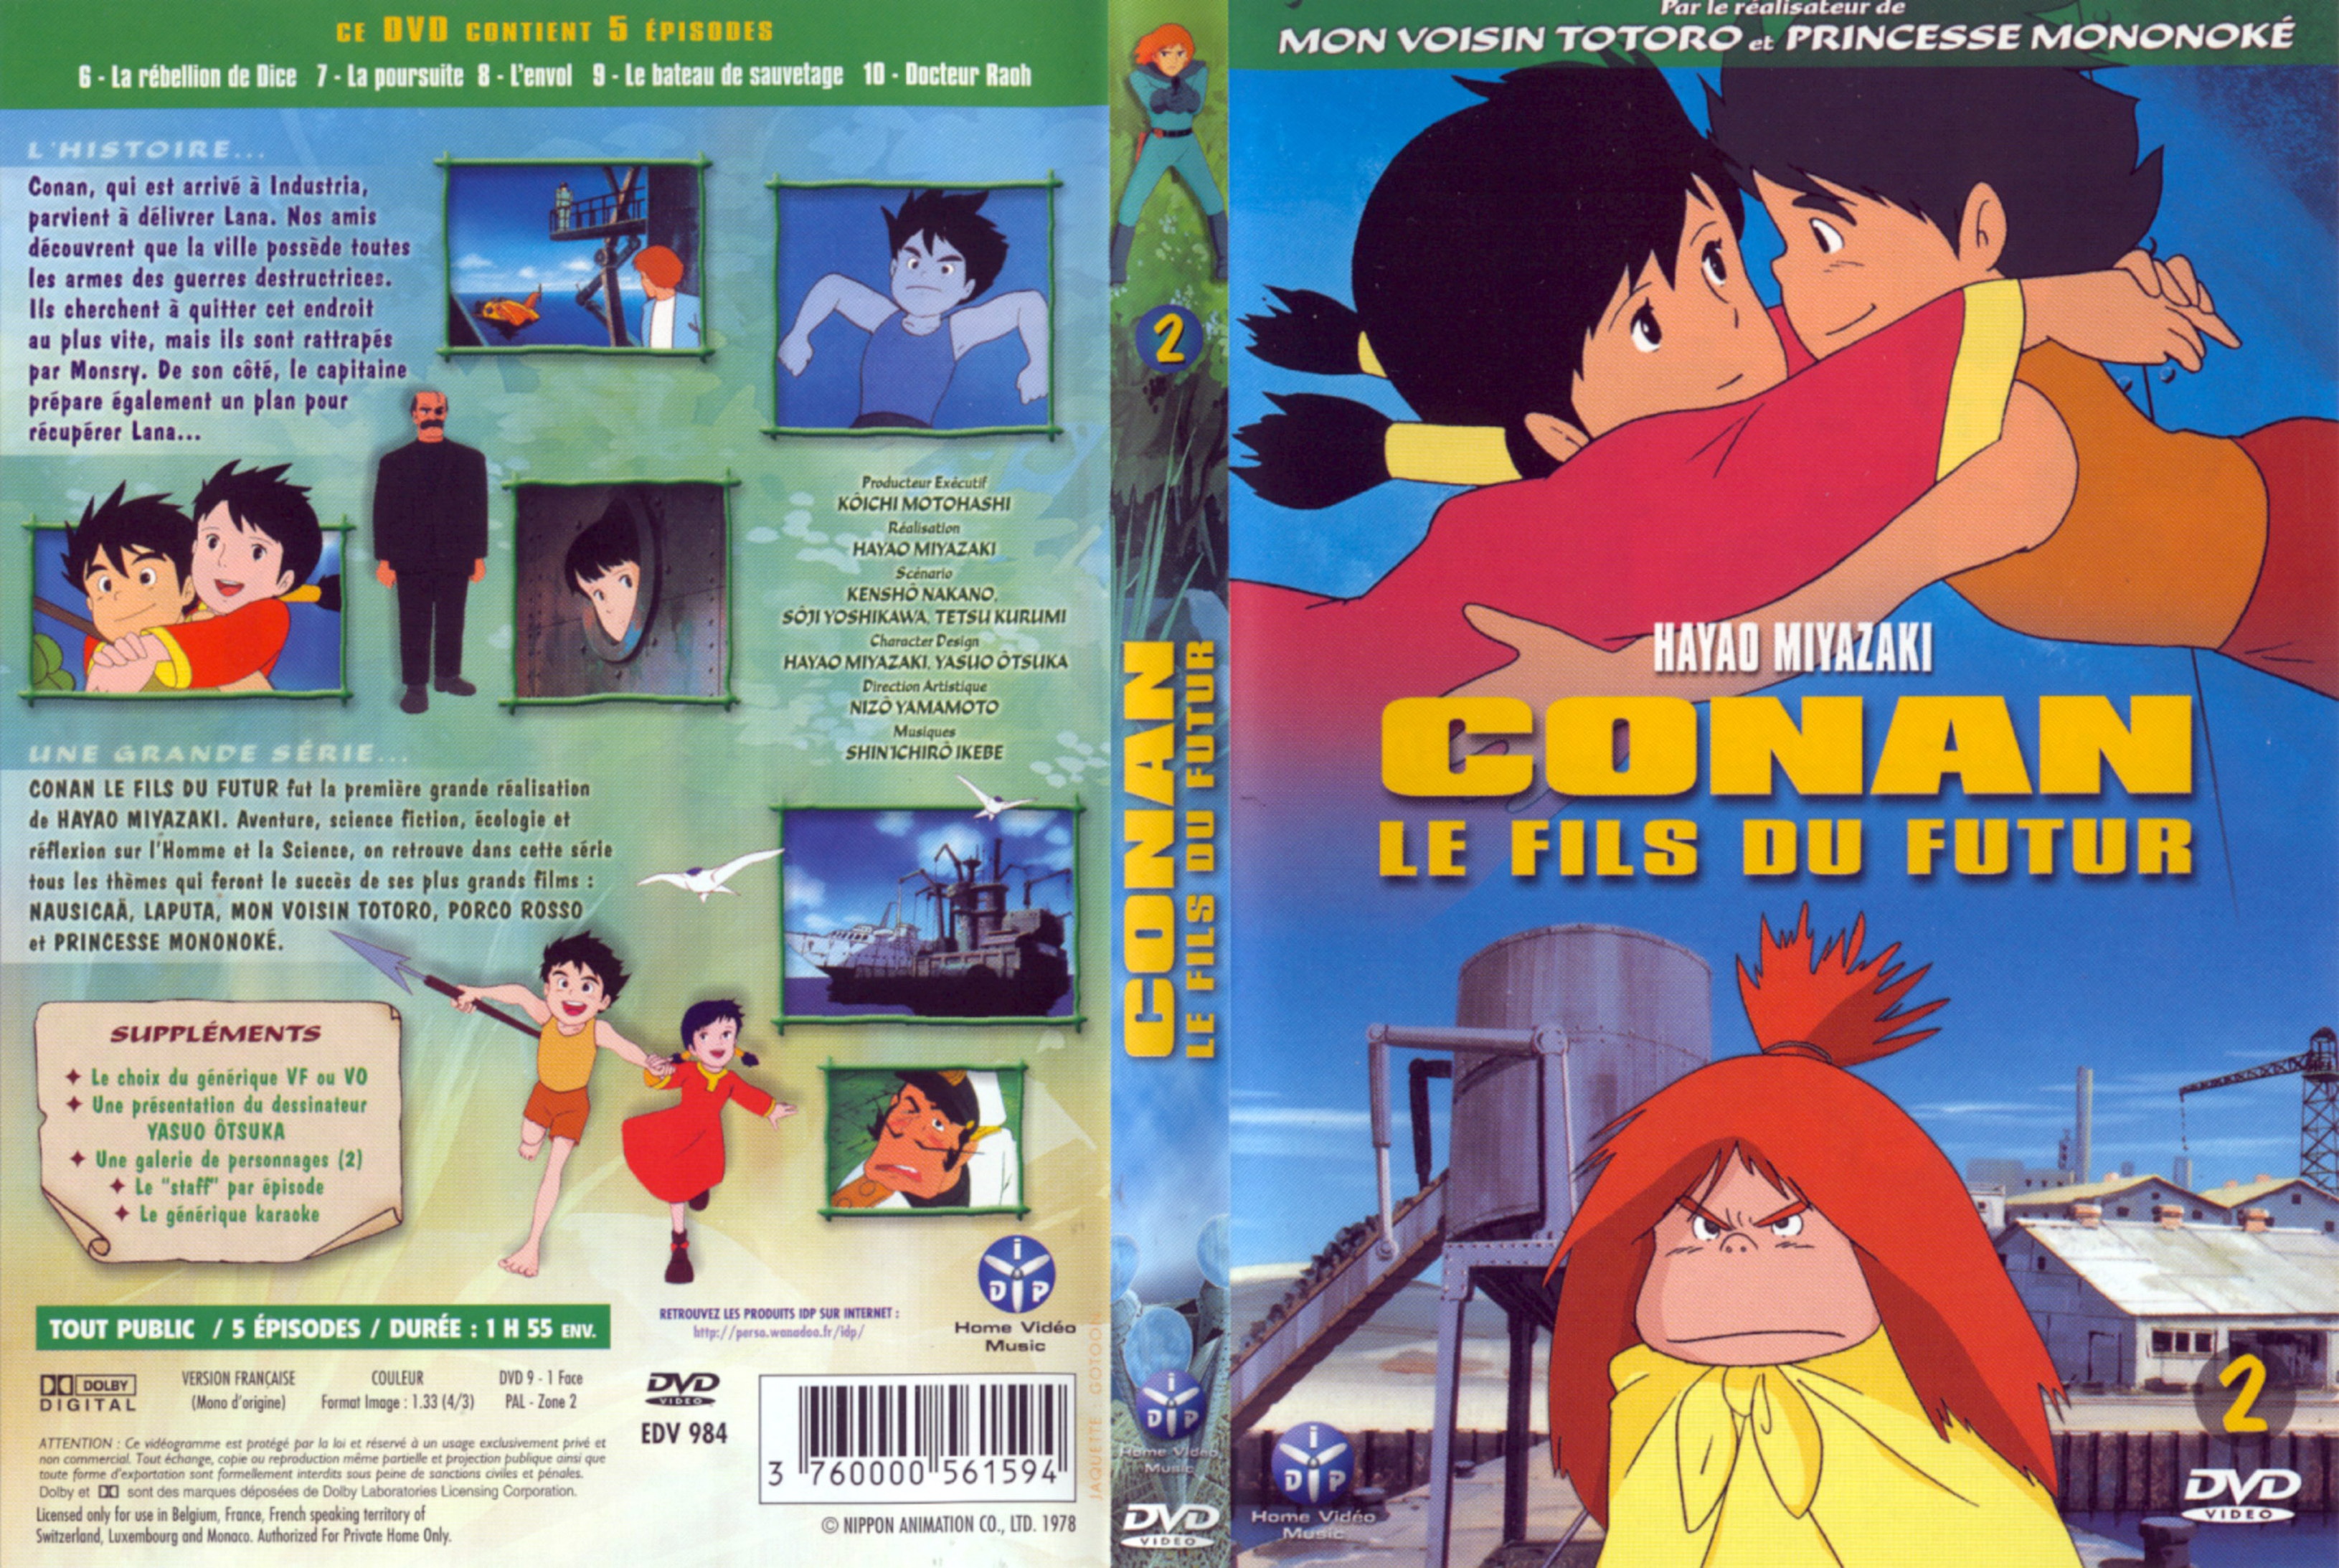 Jaquette DVD Conan le fils du futur vol 2